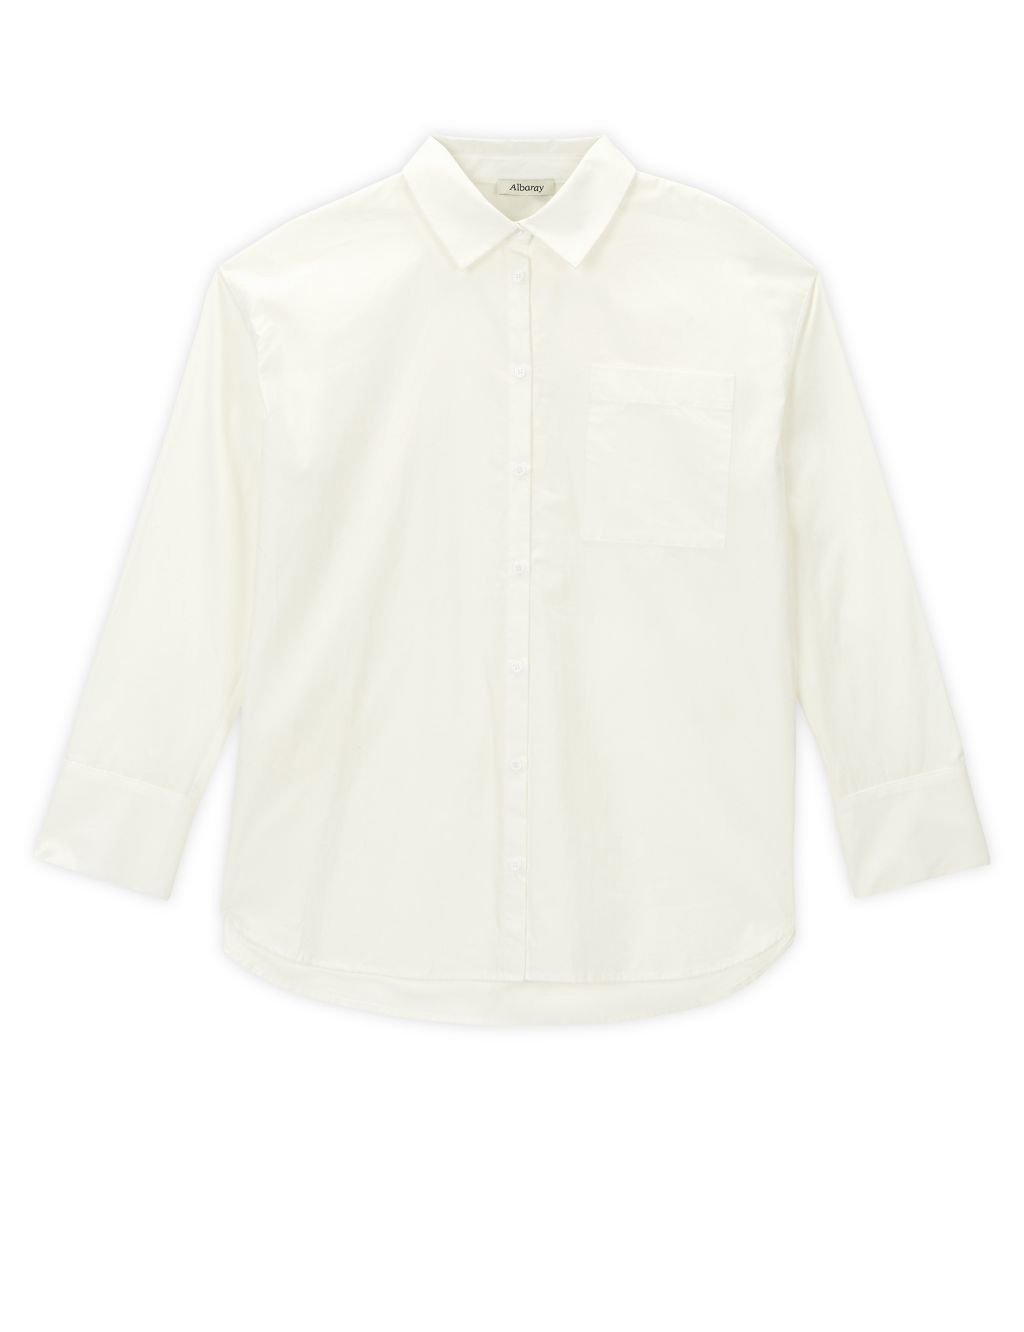 Organic Cotton Collared Shirt image 2